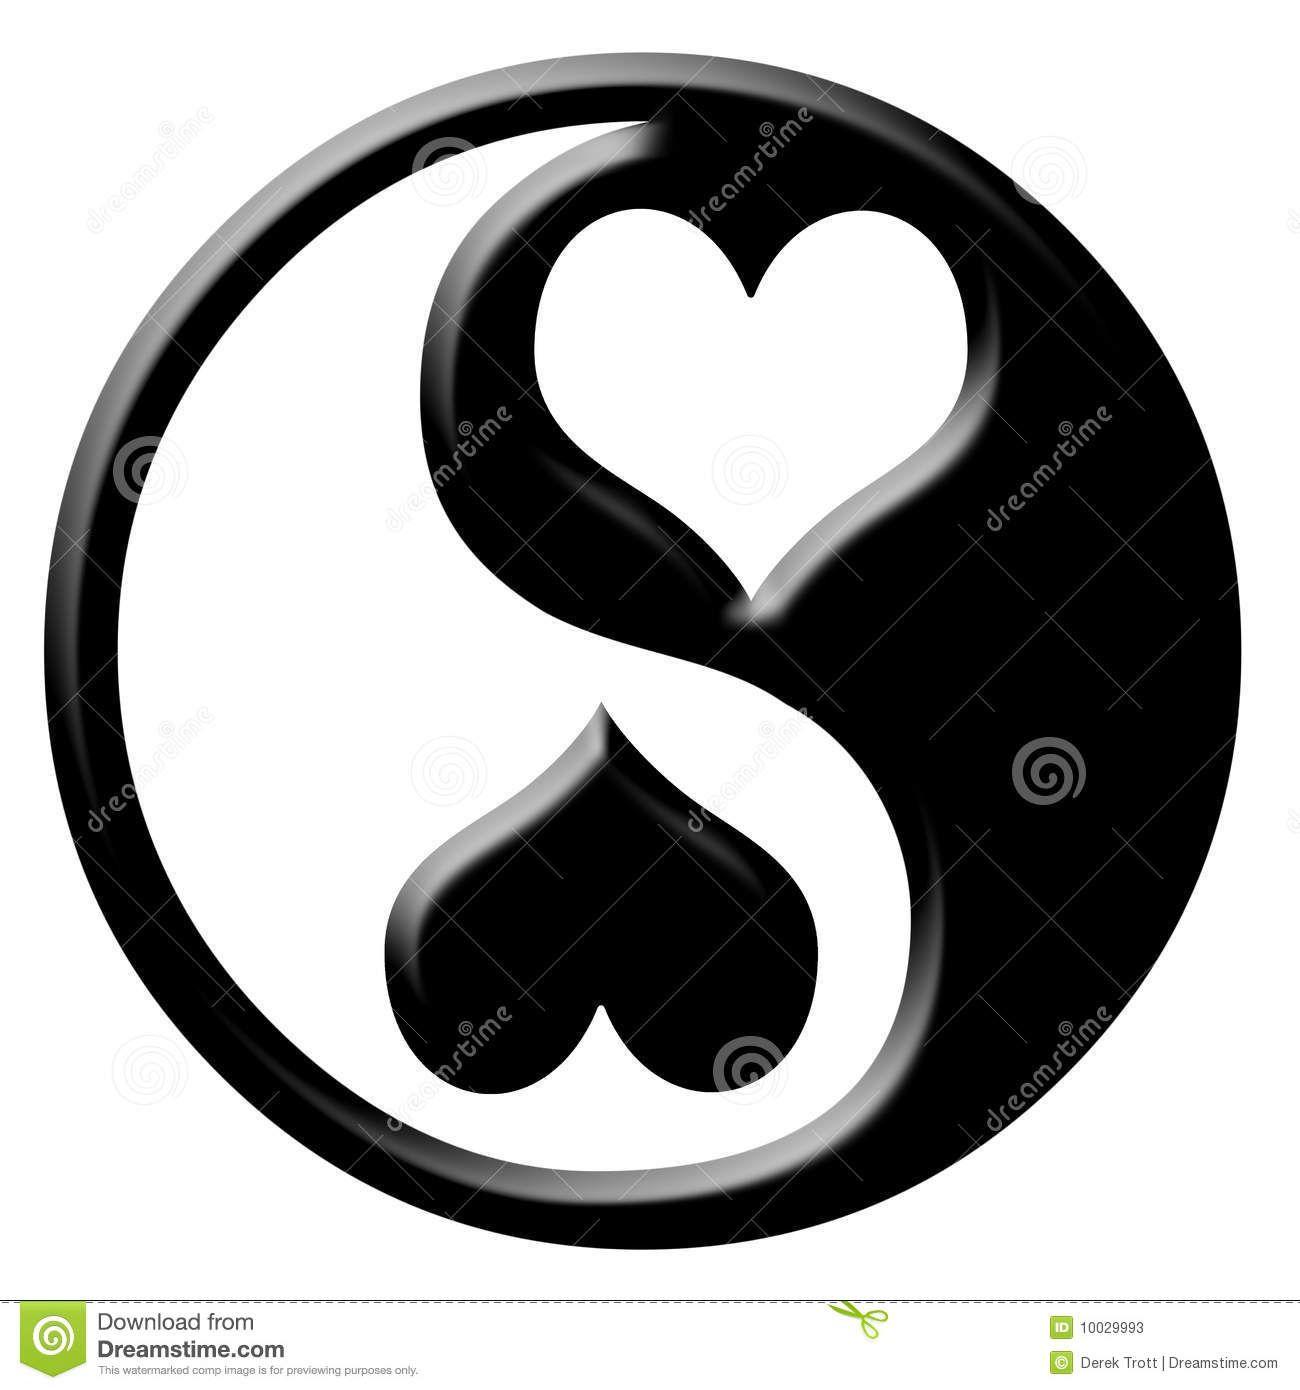 Yin Yang Black and White Box Logo - Black Love Heart, Yin Yang - Download From Over 58 Million High ...